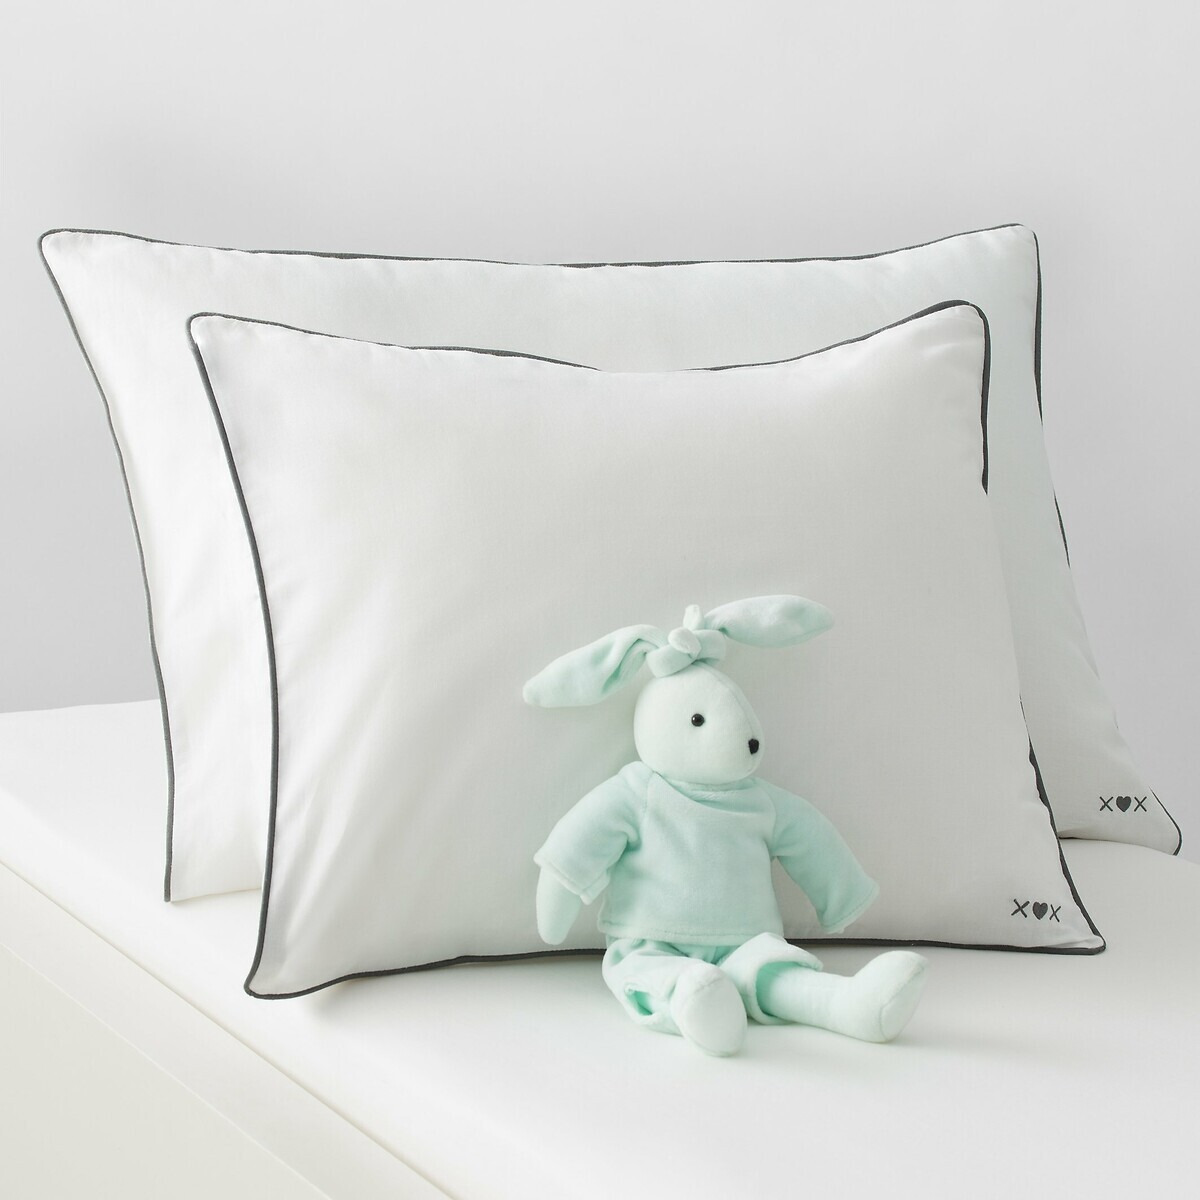 Baby's Plain Cotton Pillowcase - image 1